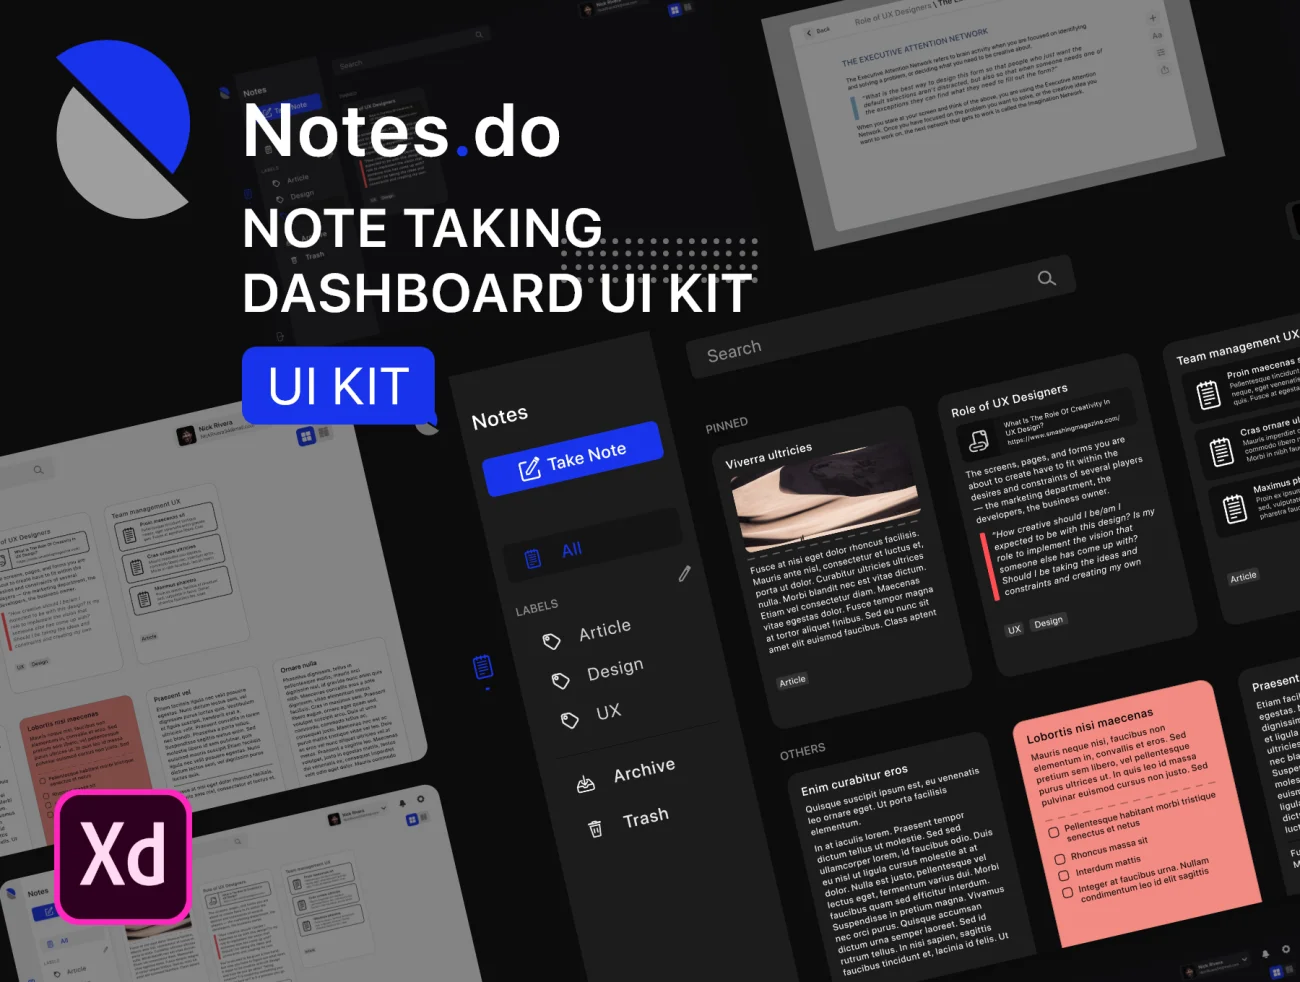 Notes do Notes Taking Dashboard UI Kit 笔记用户界面设计工具包-UI/UX、ui套件、列表、卡片式、图表、数据可视化-仪表板、表单-到位啦UI